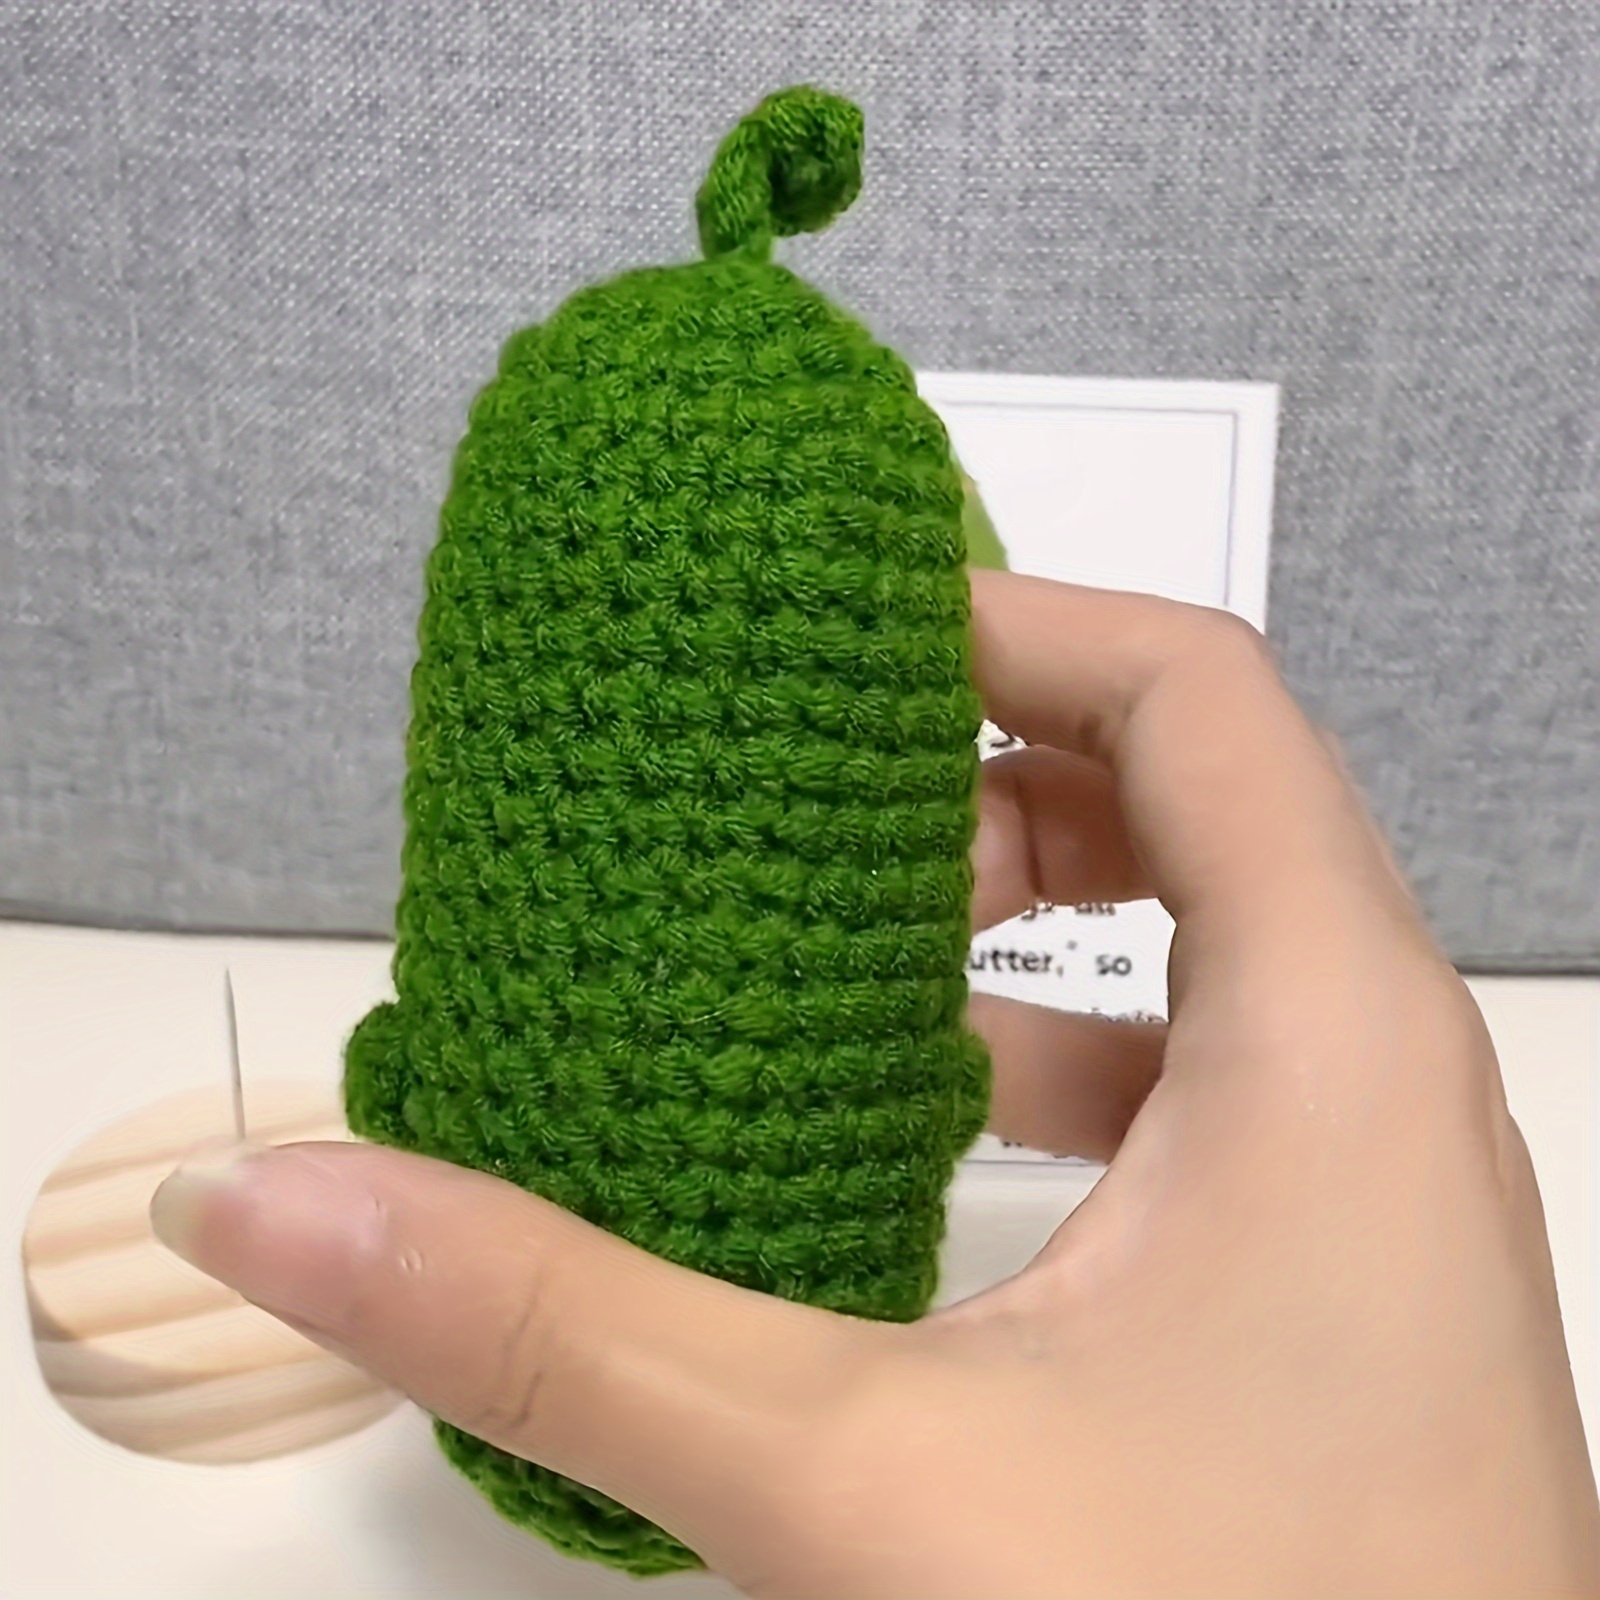 Handmade Emotional Support Pickled Cucumber ,Crochet Emotional-Support